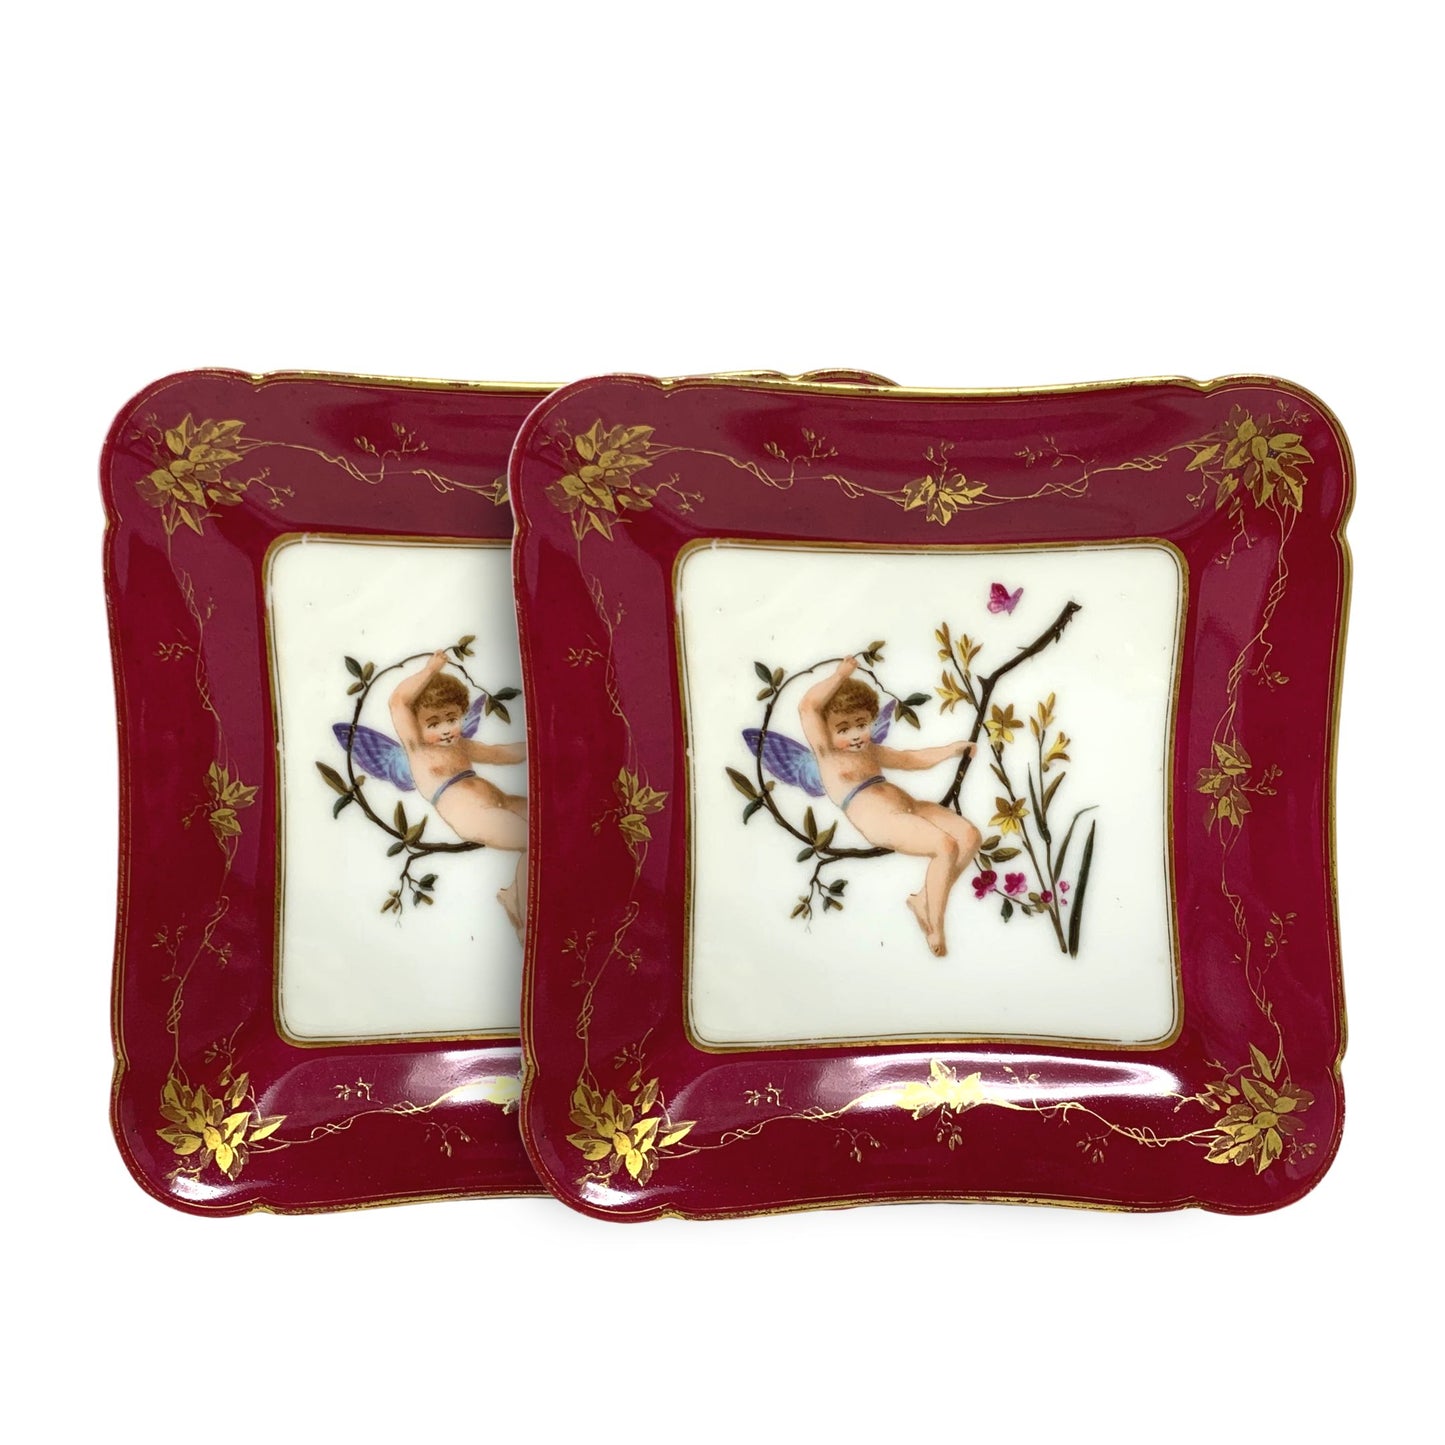 CFH/ GDM Limoges France Cherub/ Fairy Cabinet Plates (9)